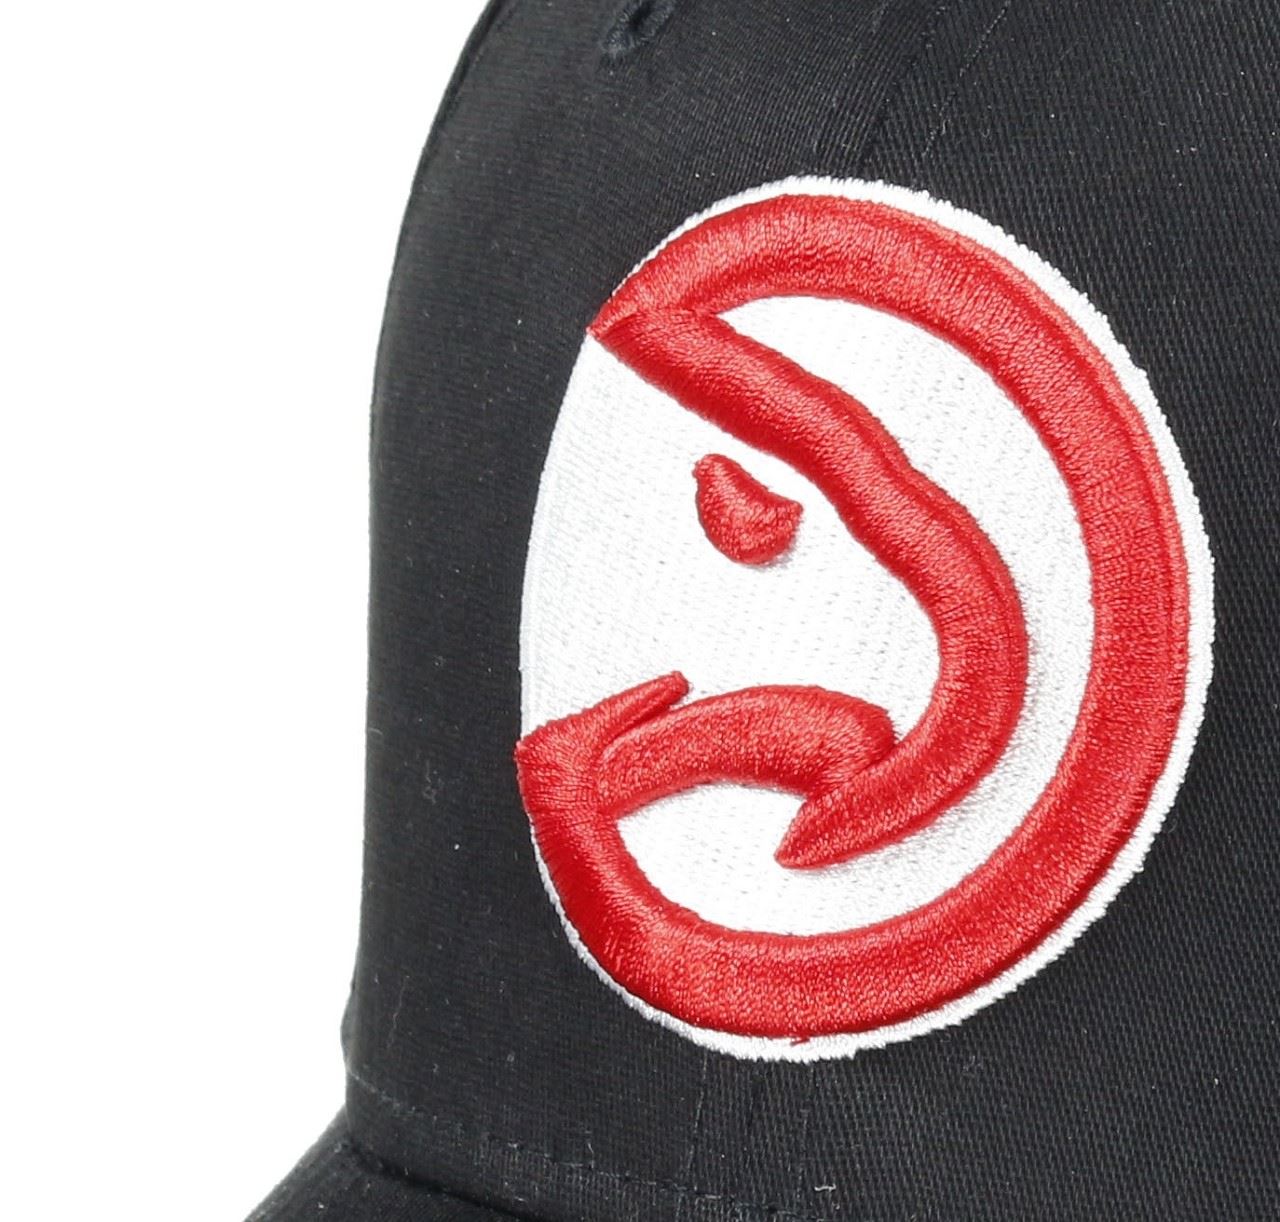 Atlanta Hawks NBA Essential 9Fifty Stretch Snapback Cap New Era